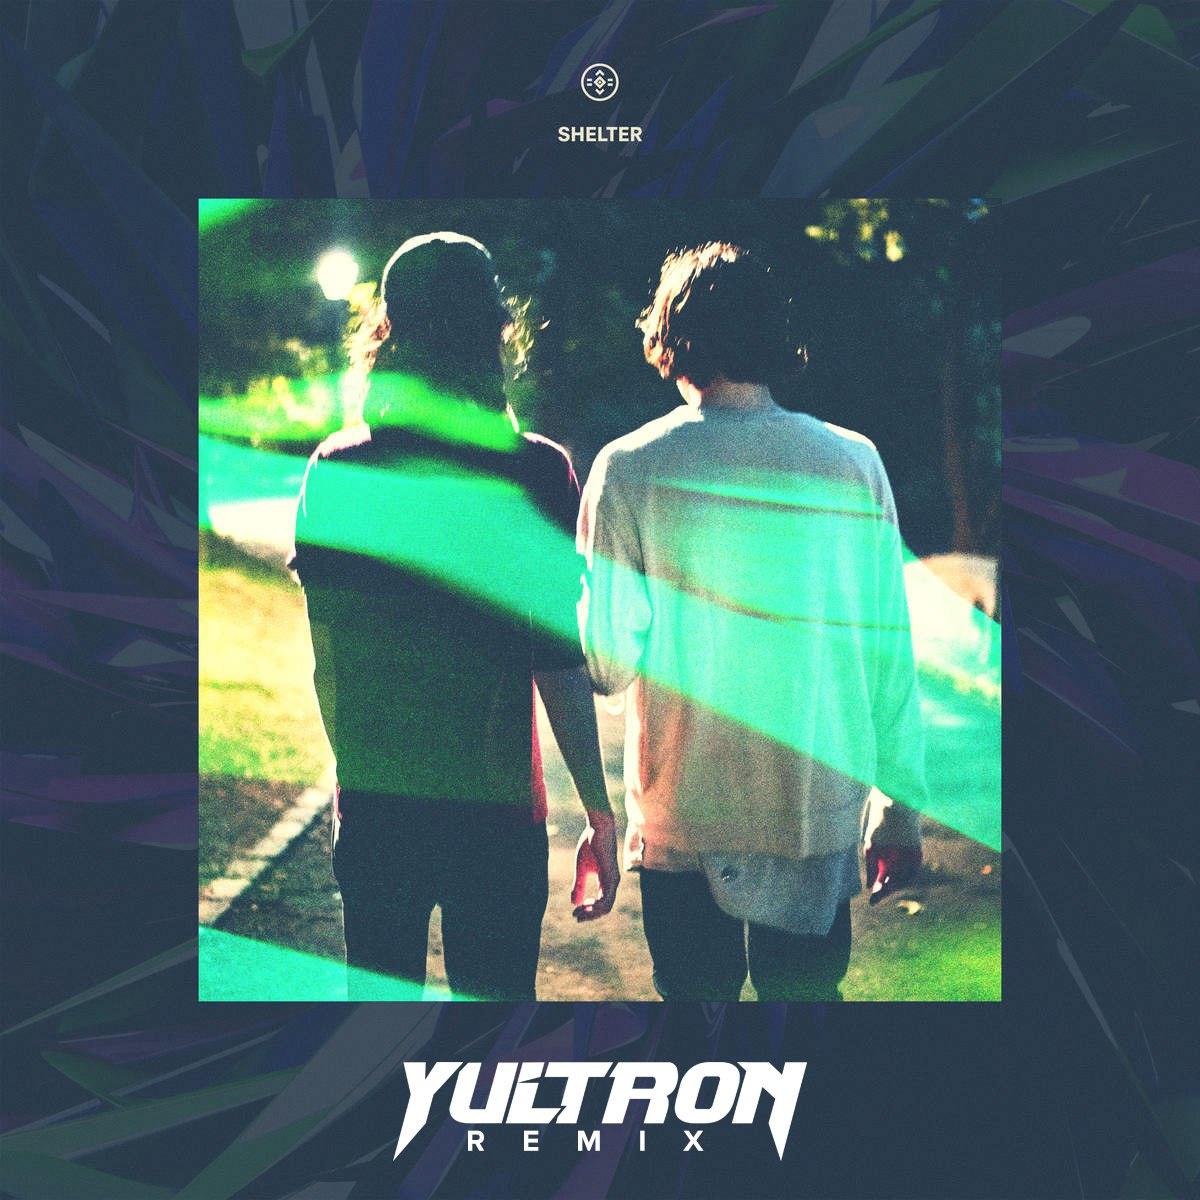 Shelter (Yultron Remix)